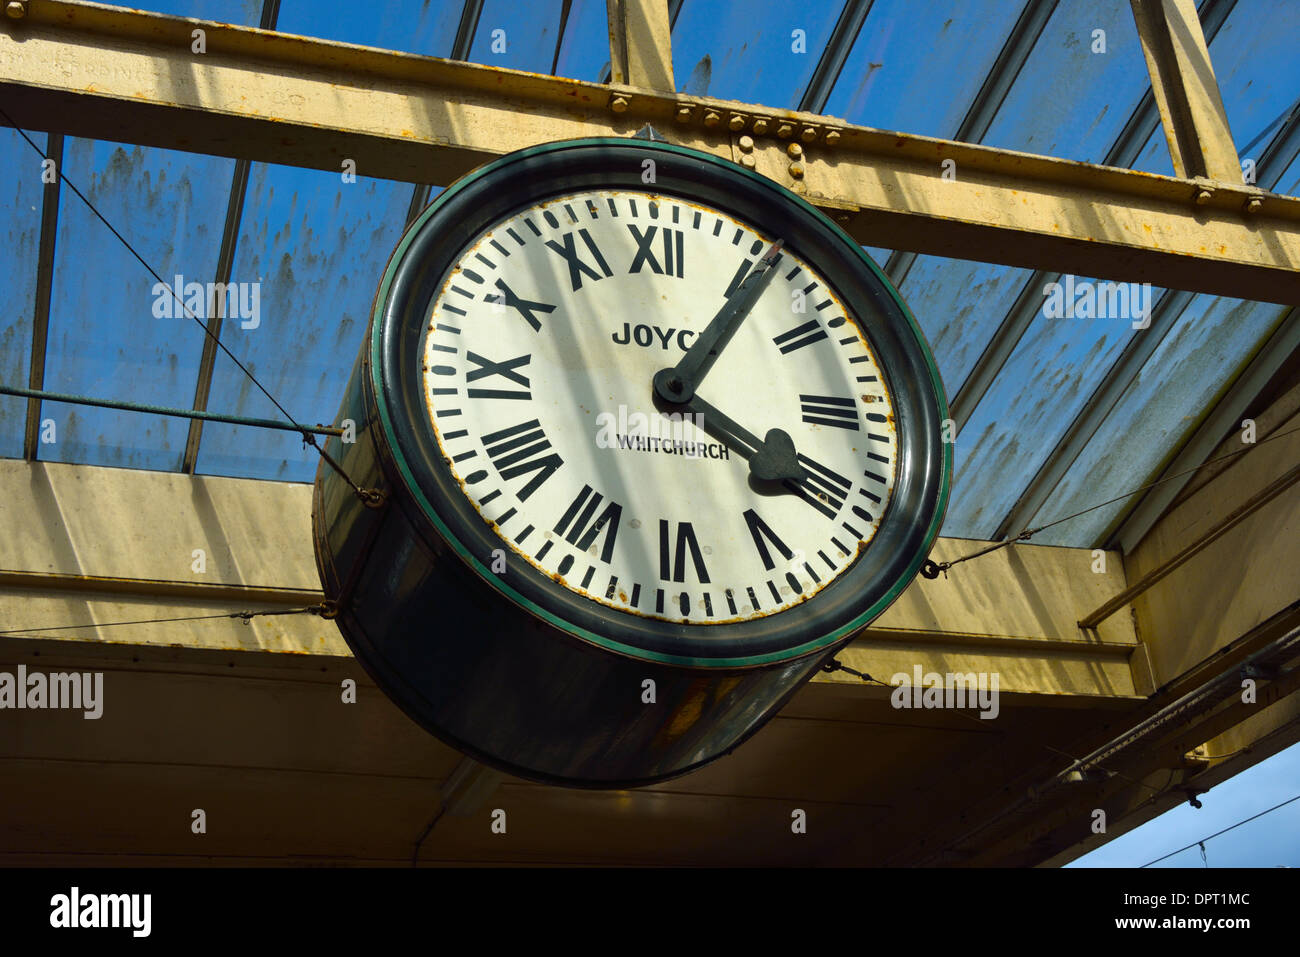 Joyce, Whitchurch, clock. Rail Station, Carnforth, Lancashire, England, United Kingdom, Europe. Stock Photo